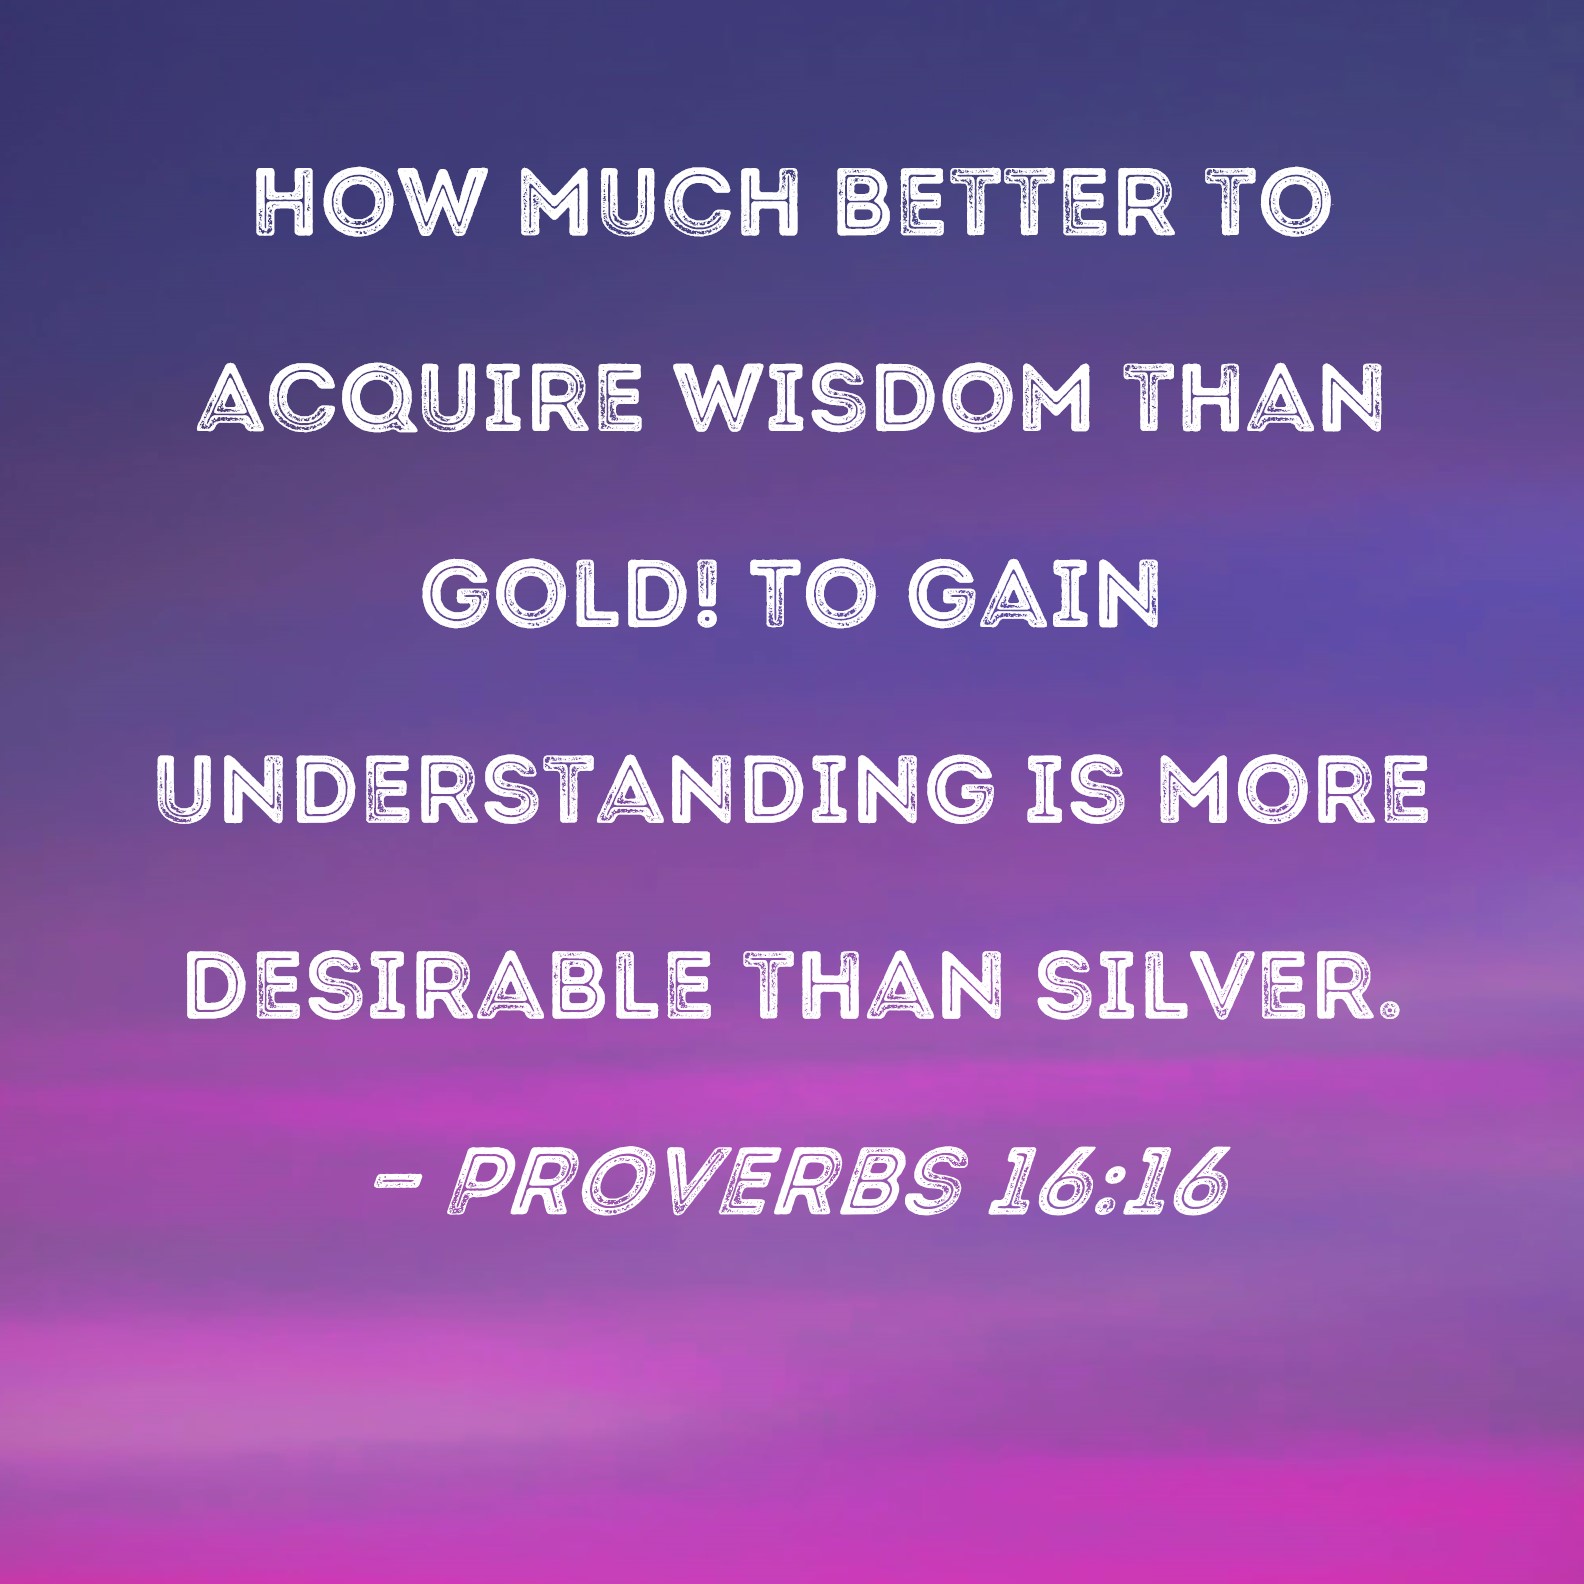 Proverbs 16:16 - Wisdom is Priceless